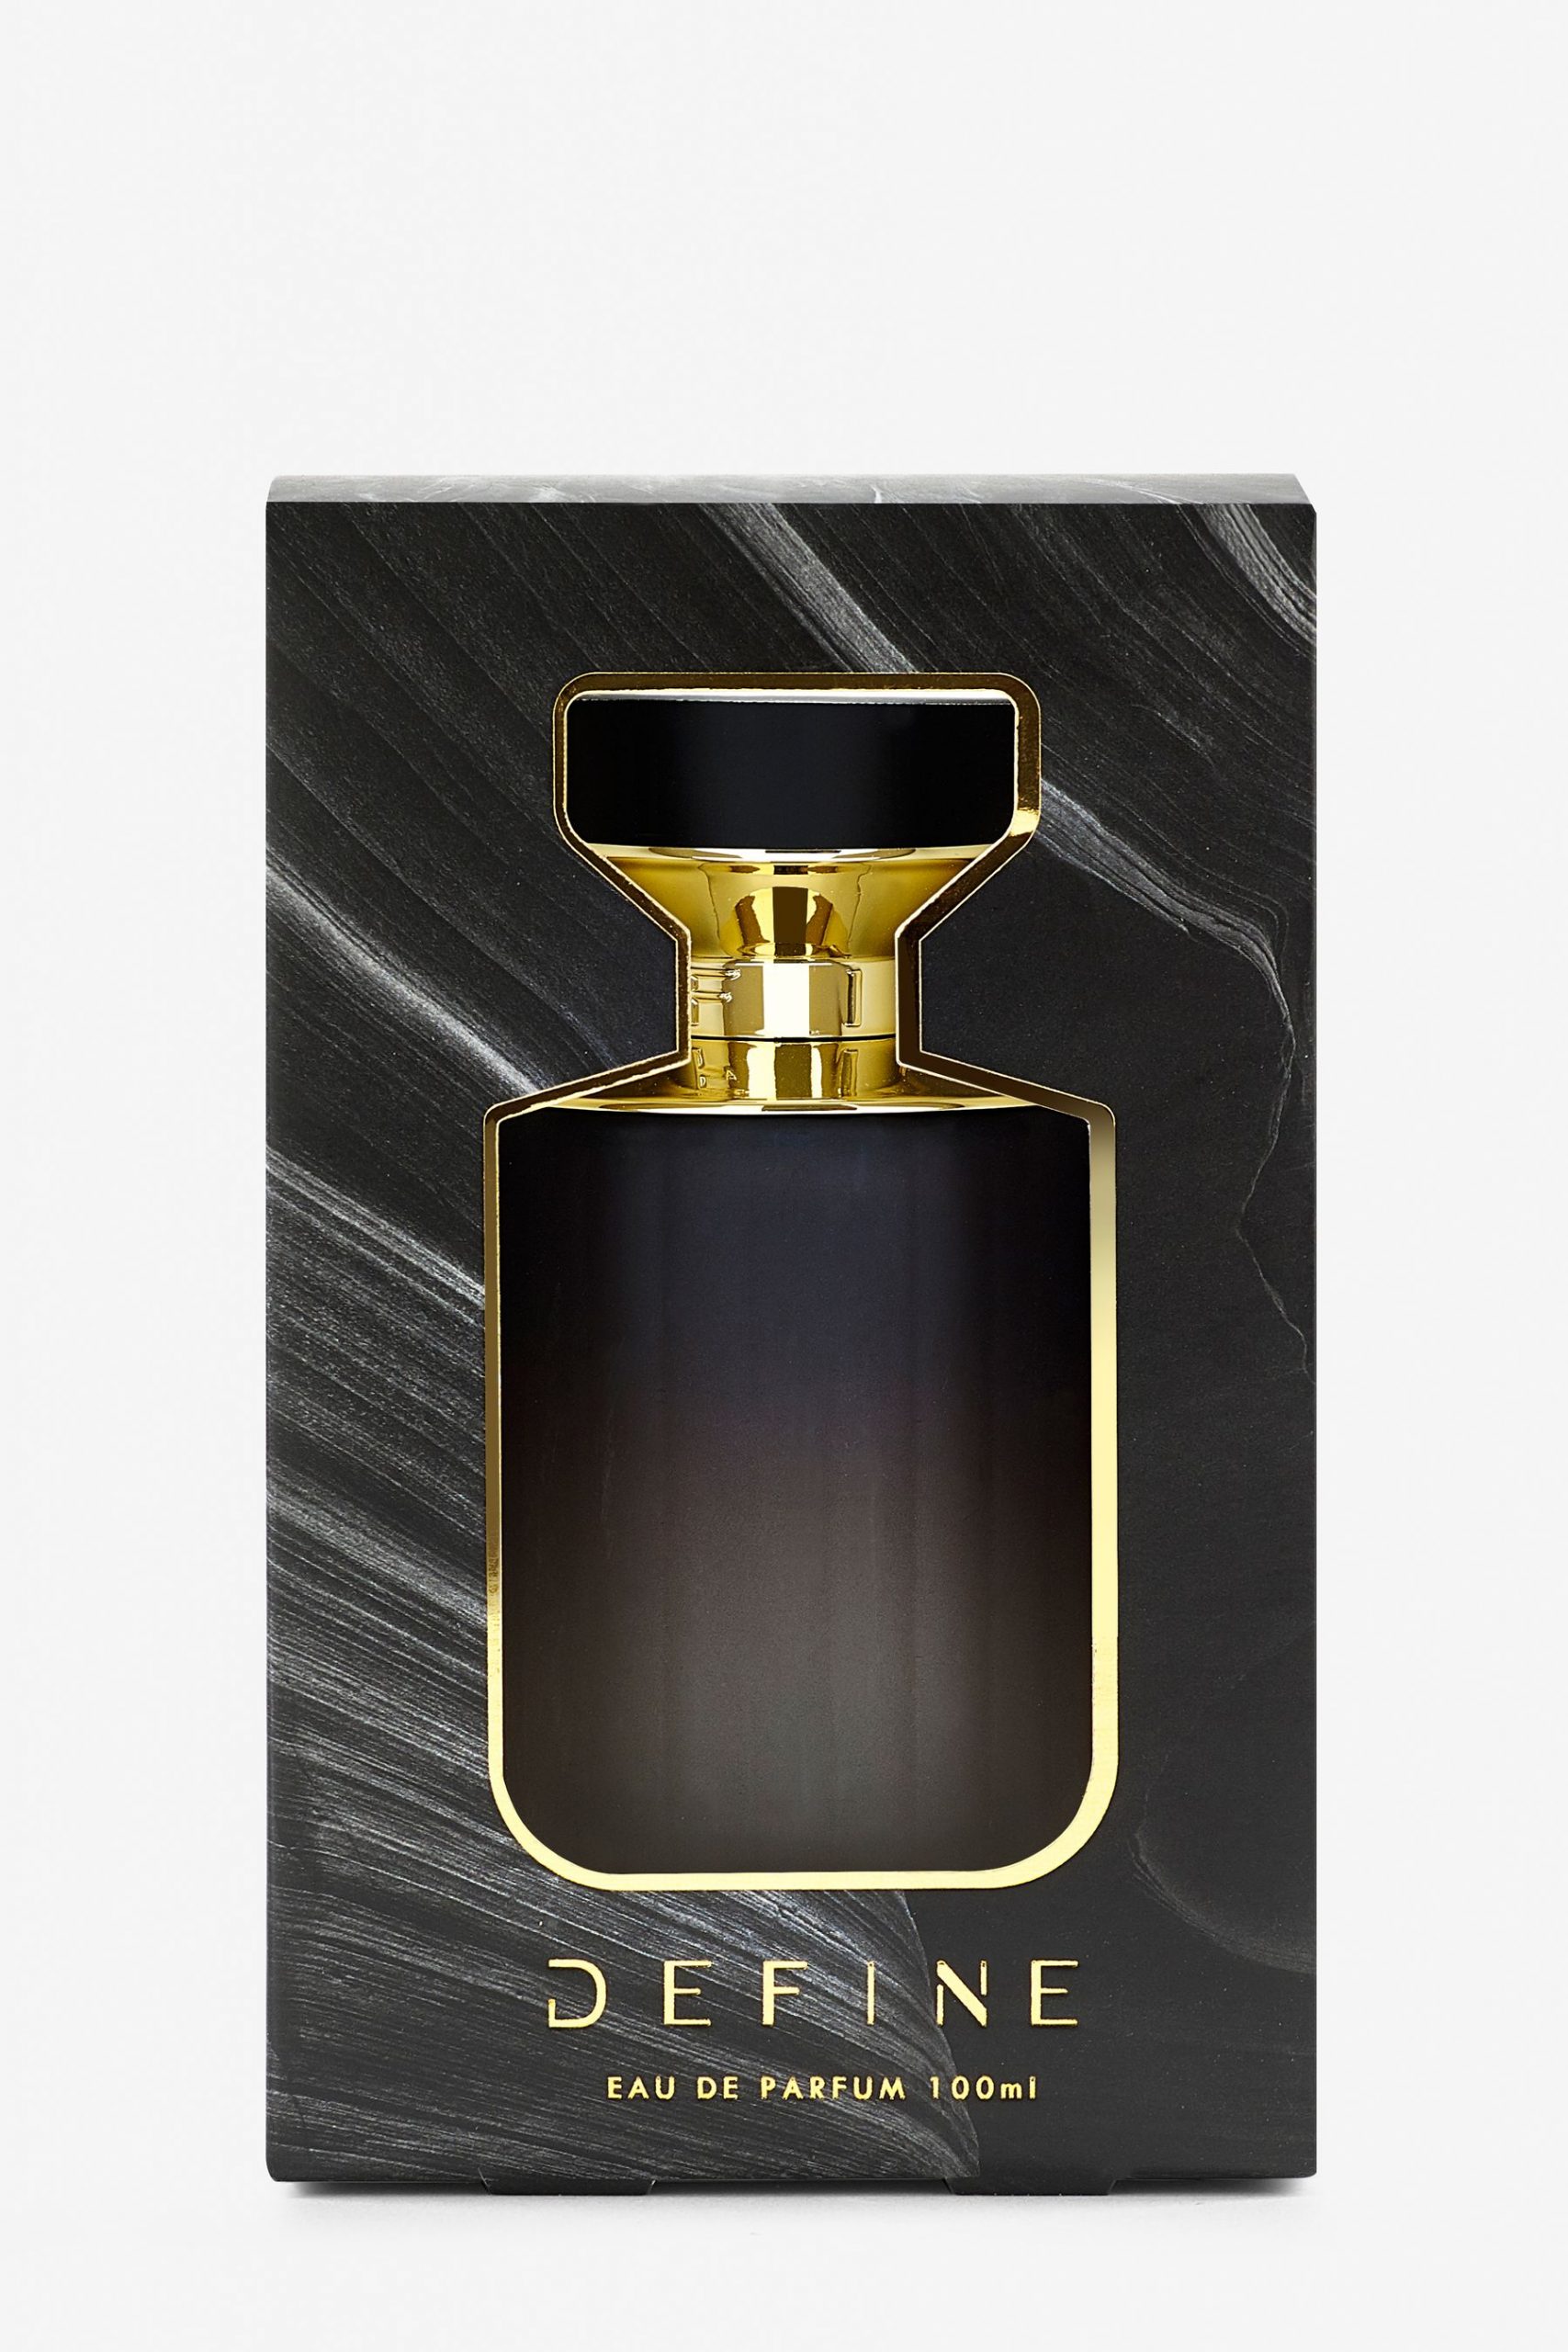 Eau De Parfum Perfume Online not dear - get at a fair price!